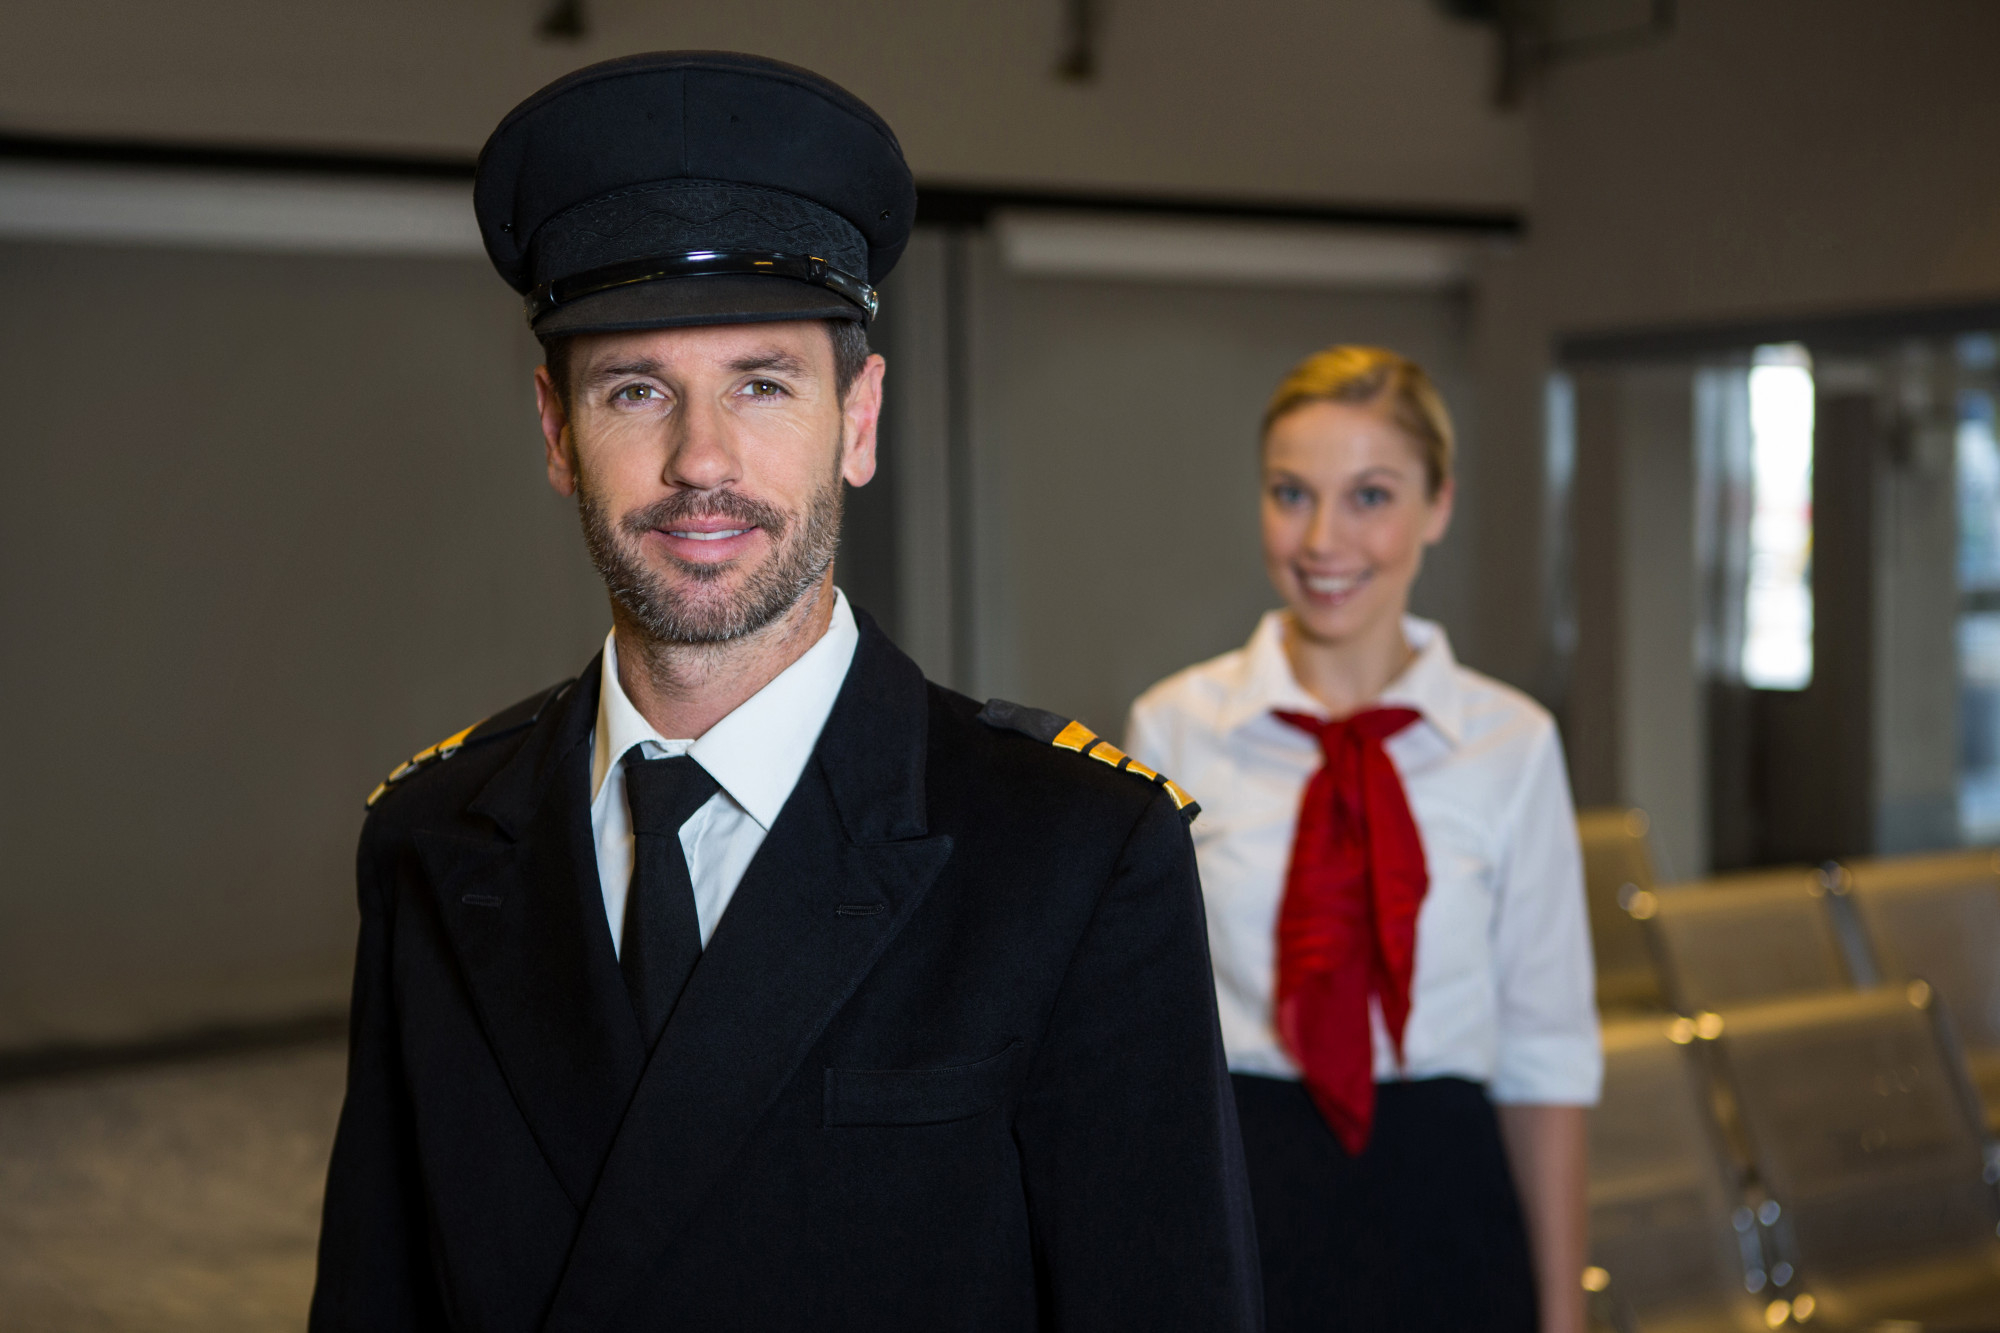 A pilot standing in front of a flight attendant | Source: Freepik